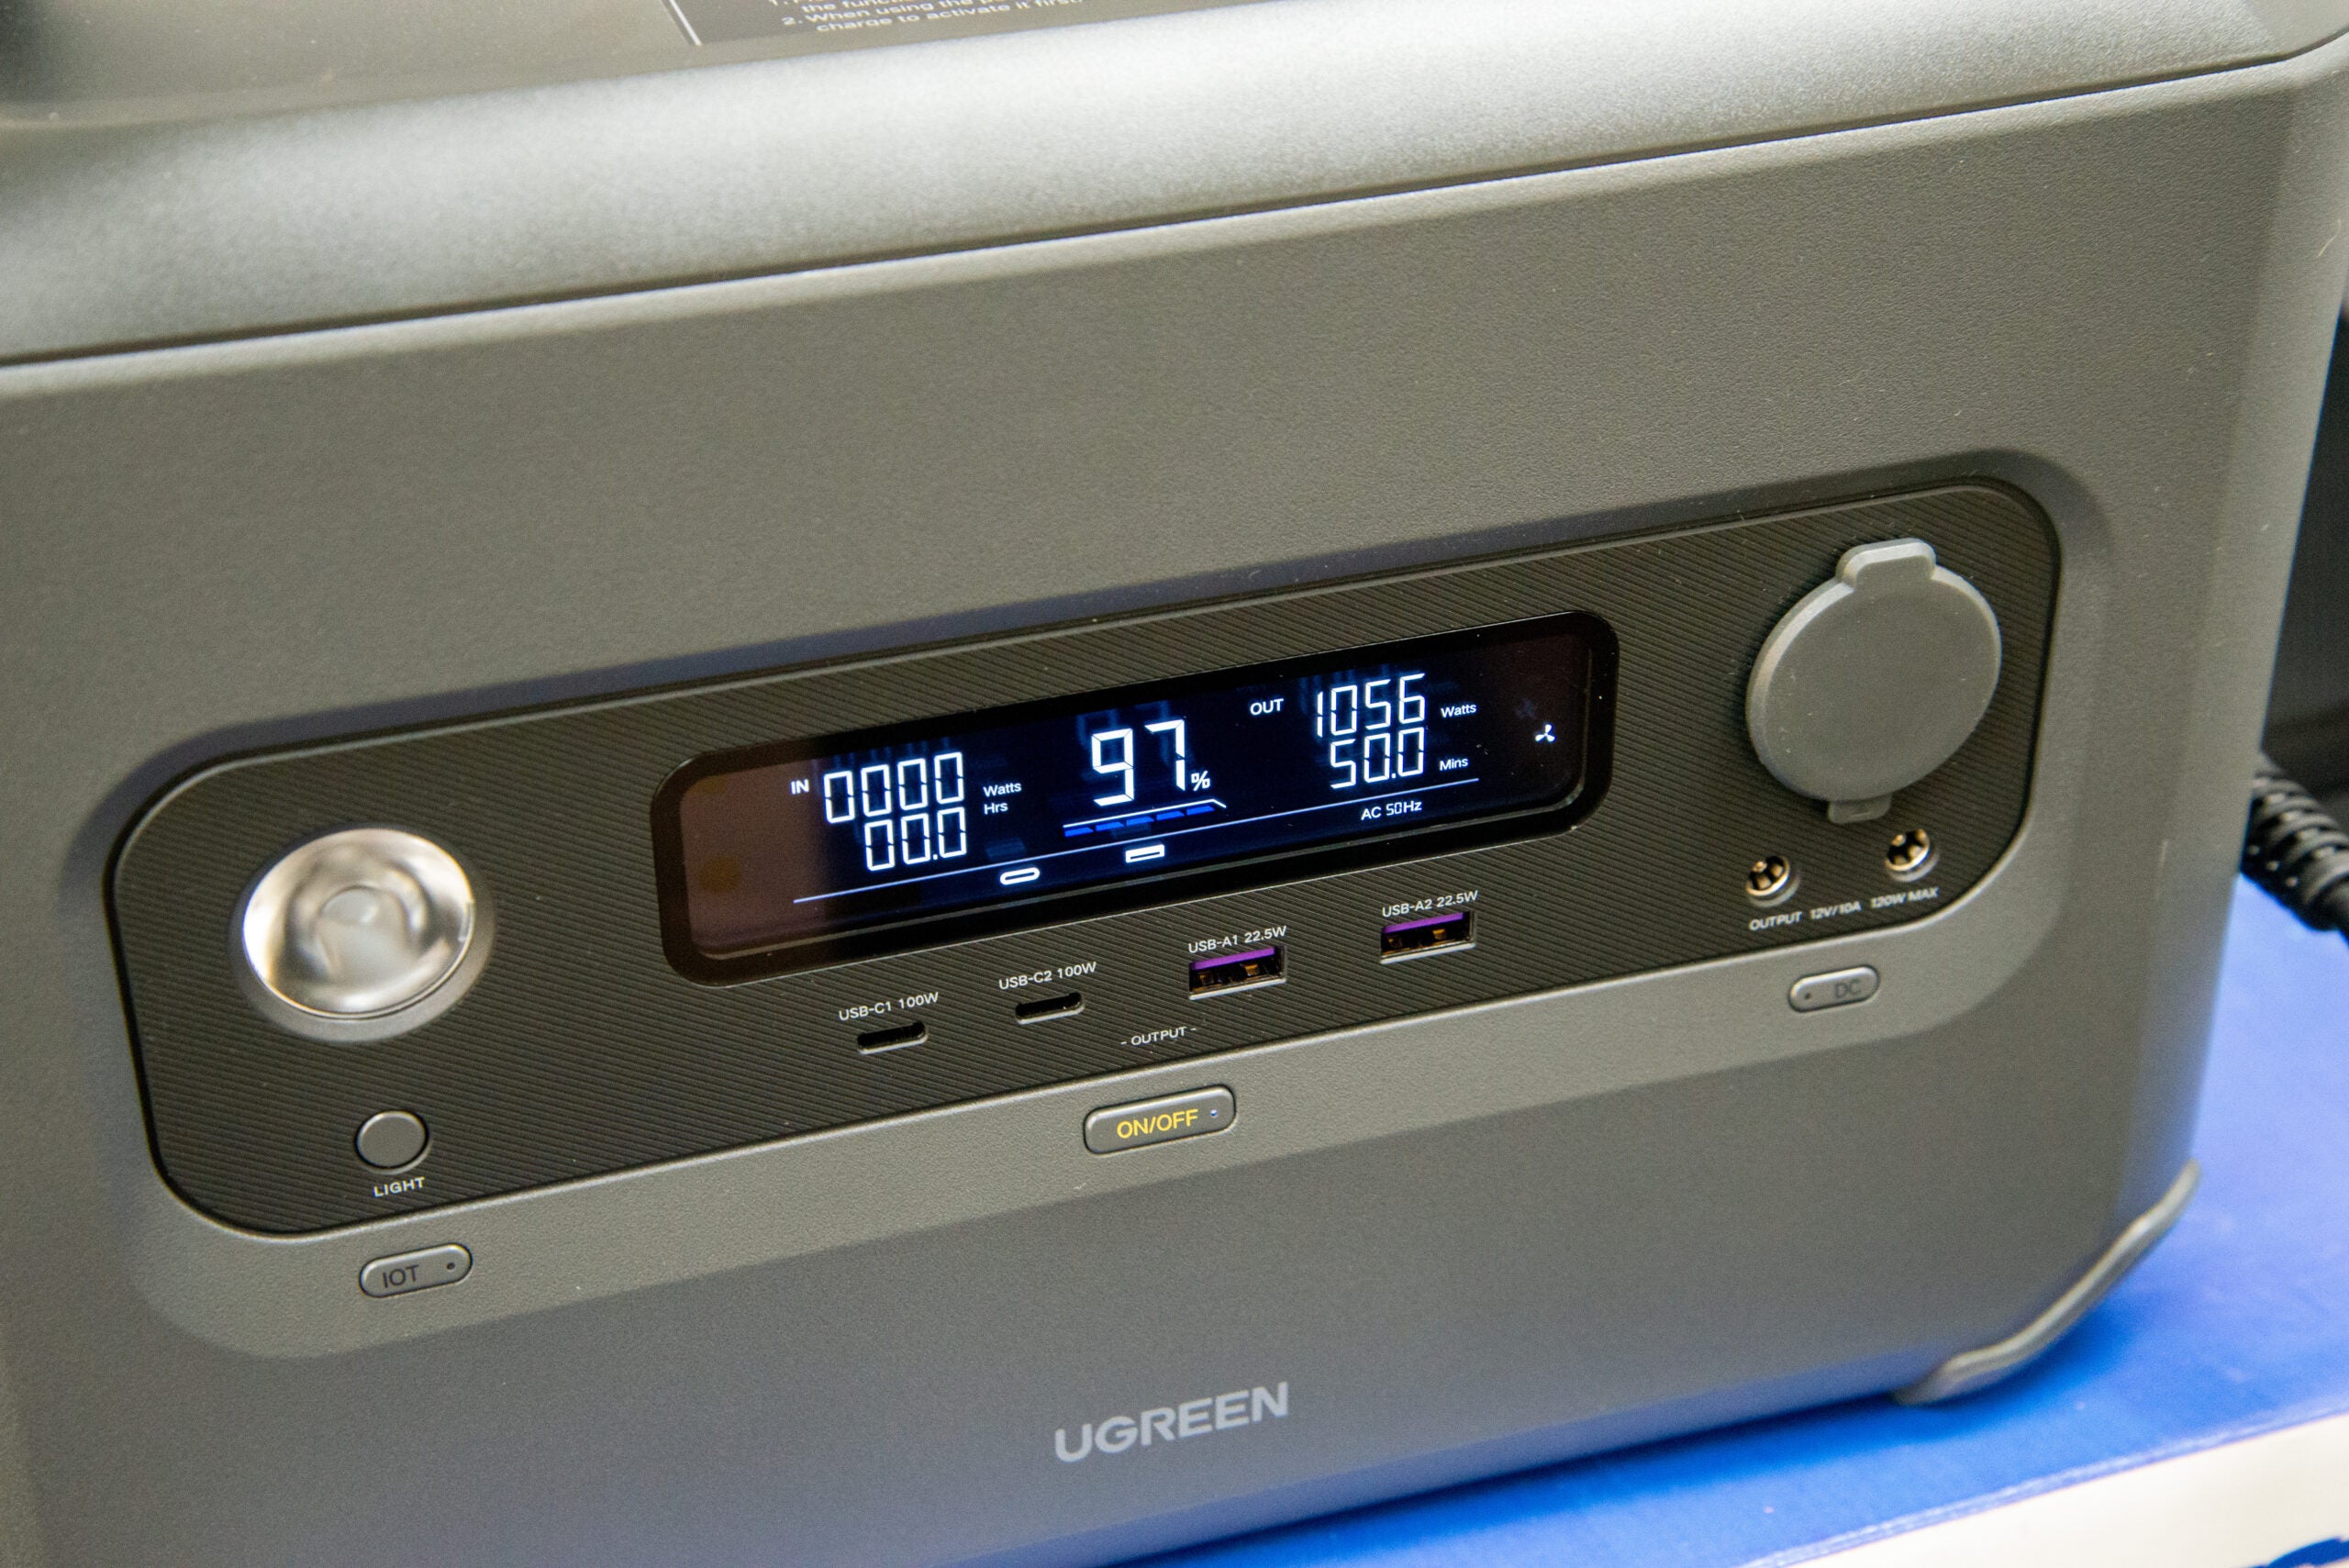 UGreen PowerRoam GS1200 display showing curent output